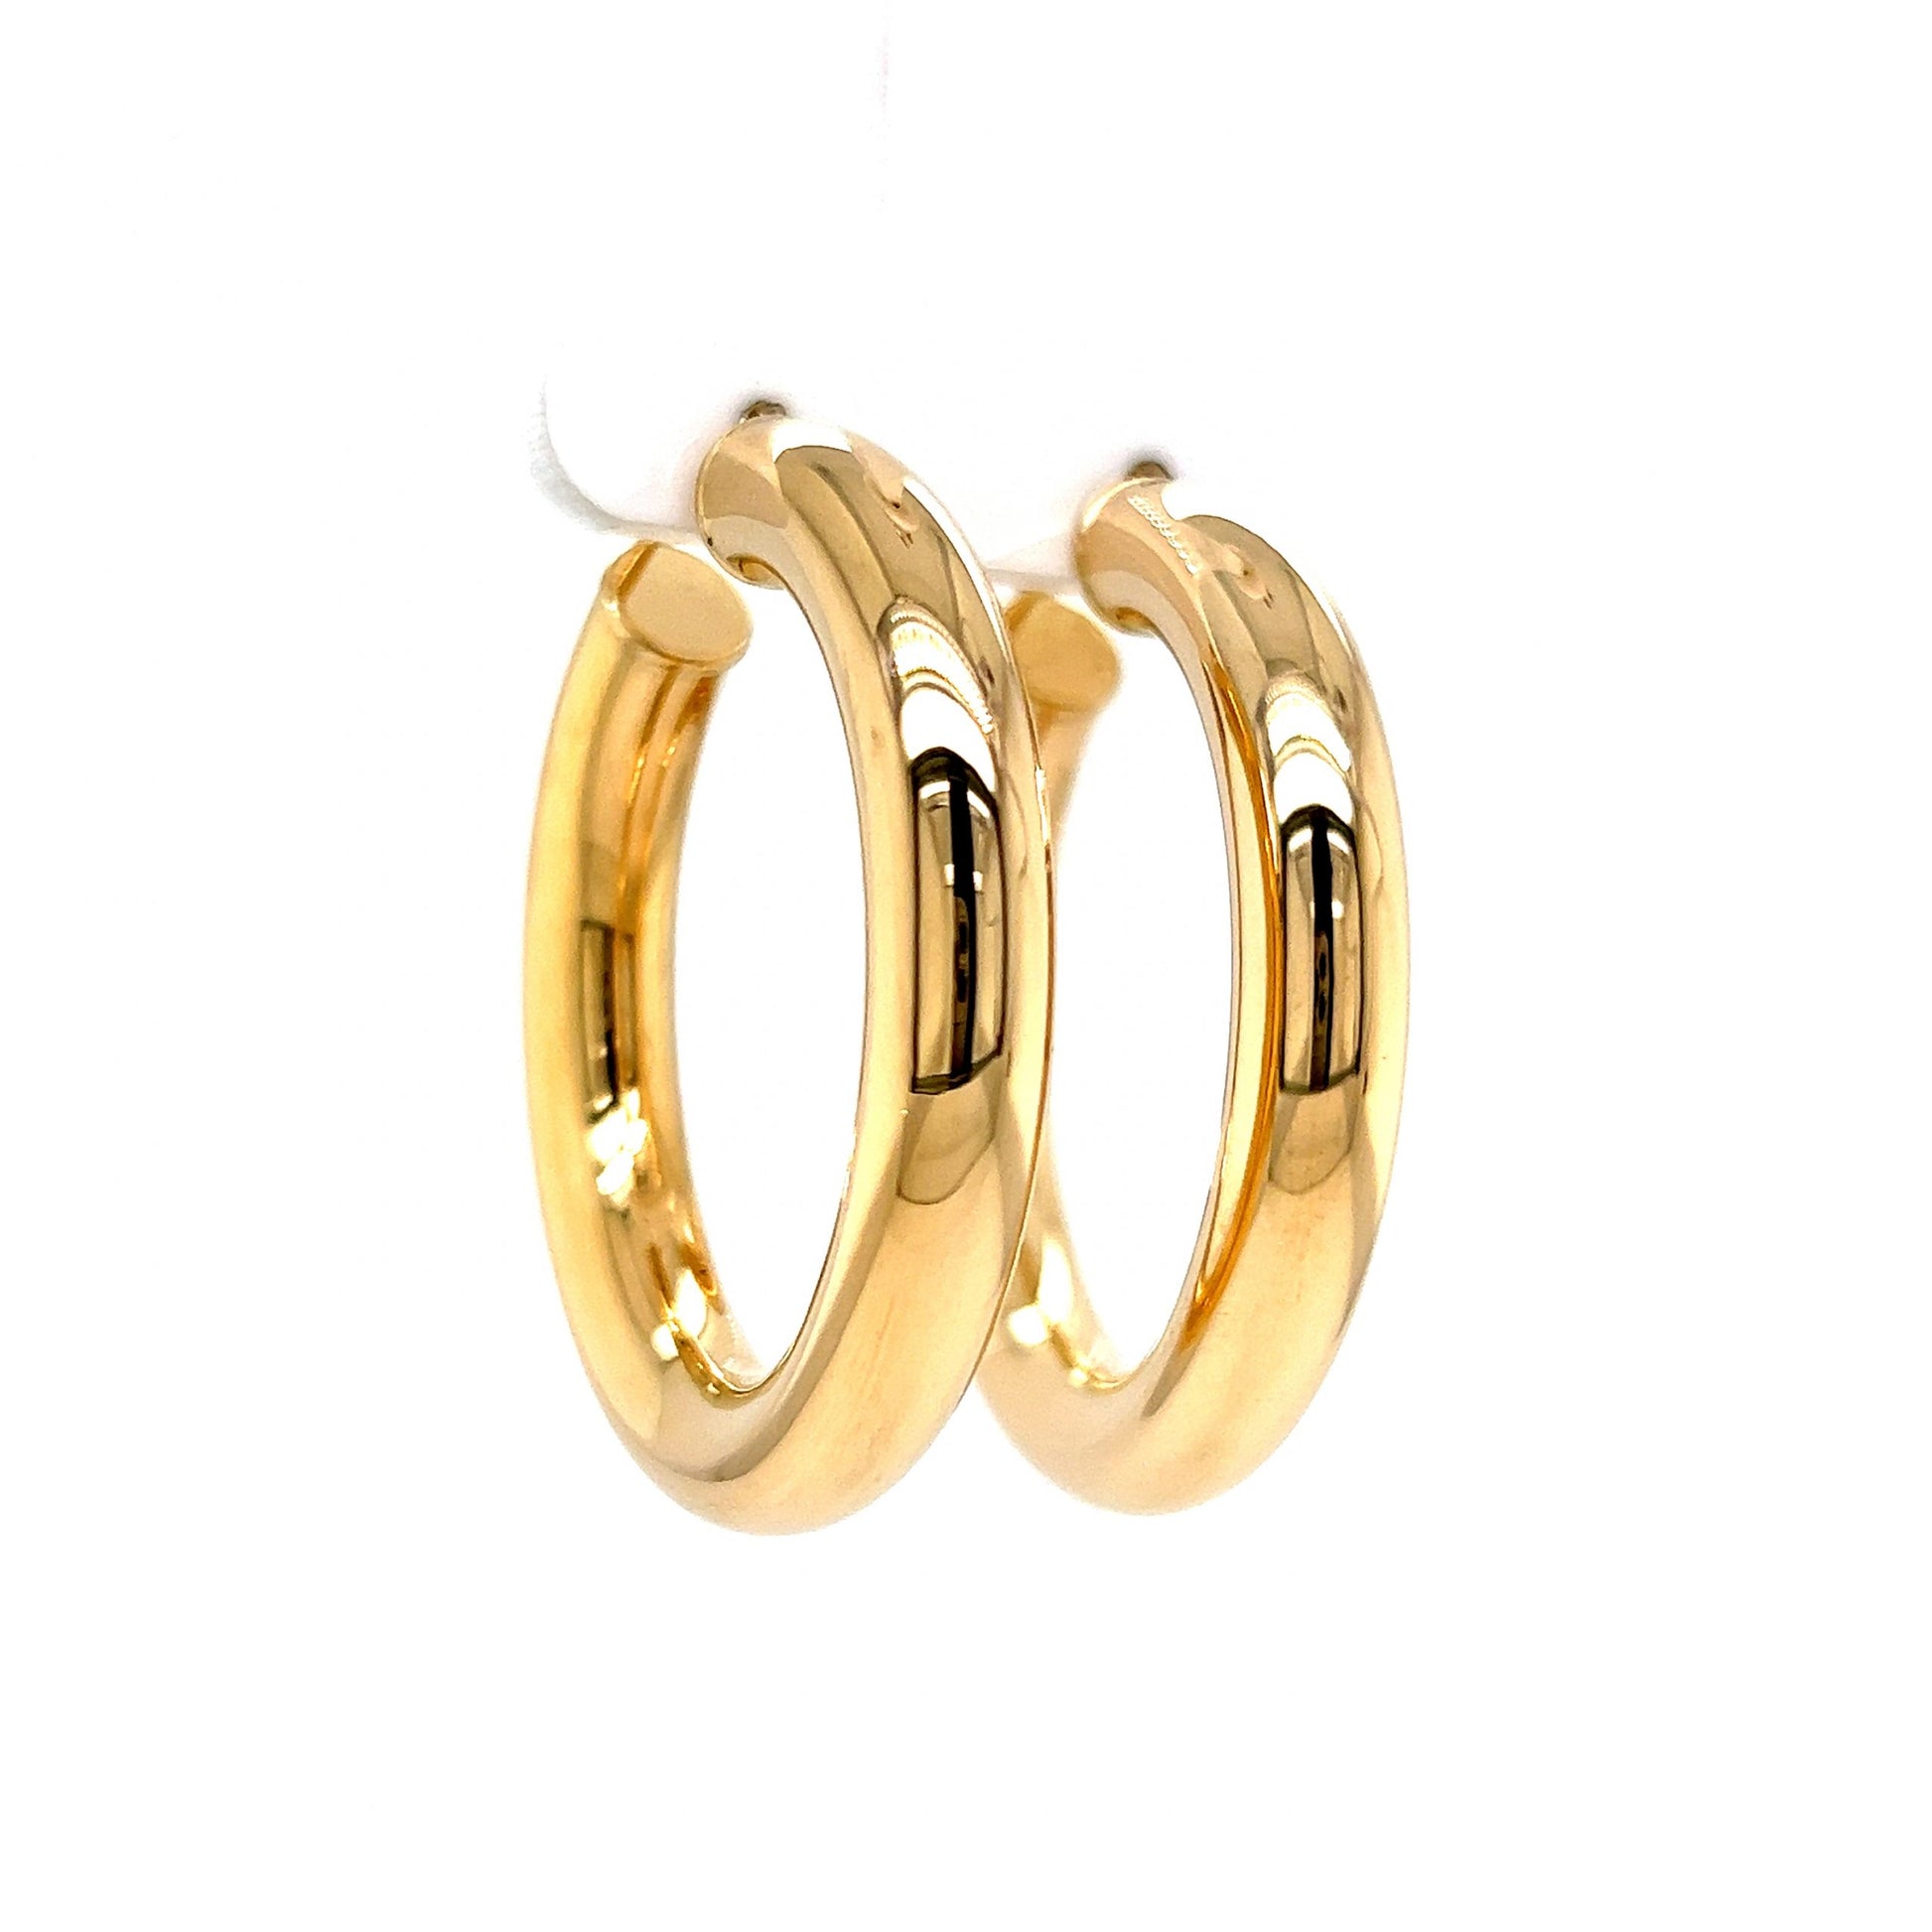 Lightweight Classic Hoop Earrings in 14k Yellow GoldComposition: 14 Karat Yellow Gold Total Gram Weight: 2.8 g